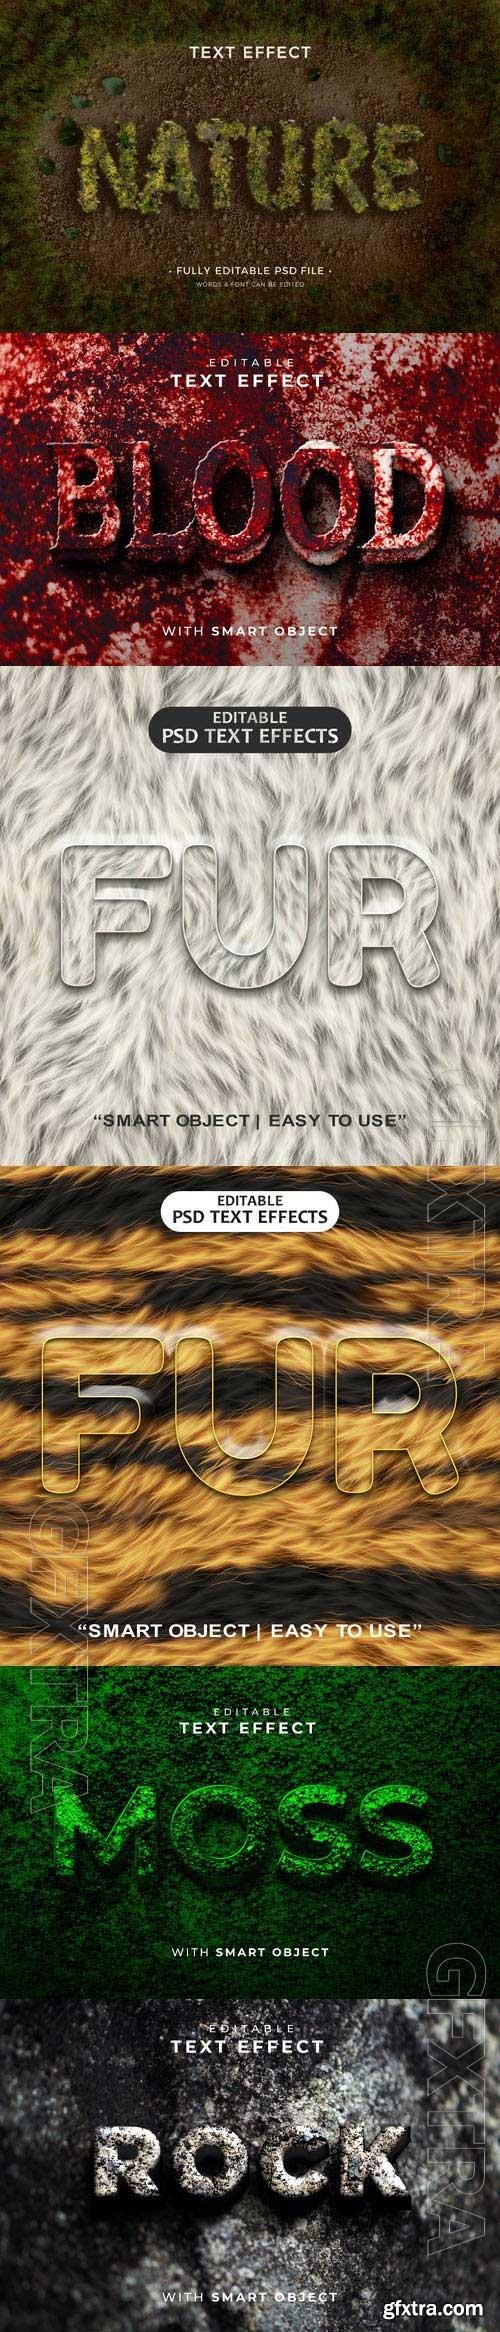 Psd style text effect editable set vol 463